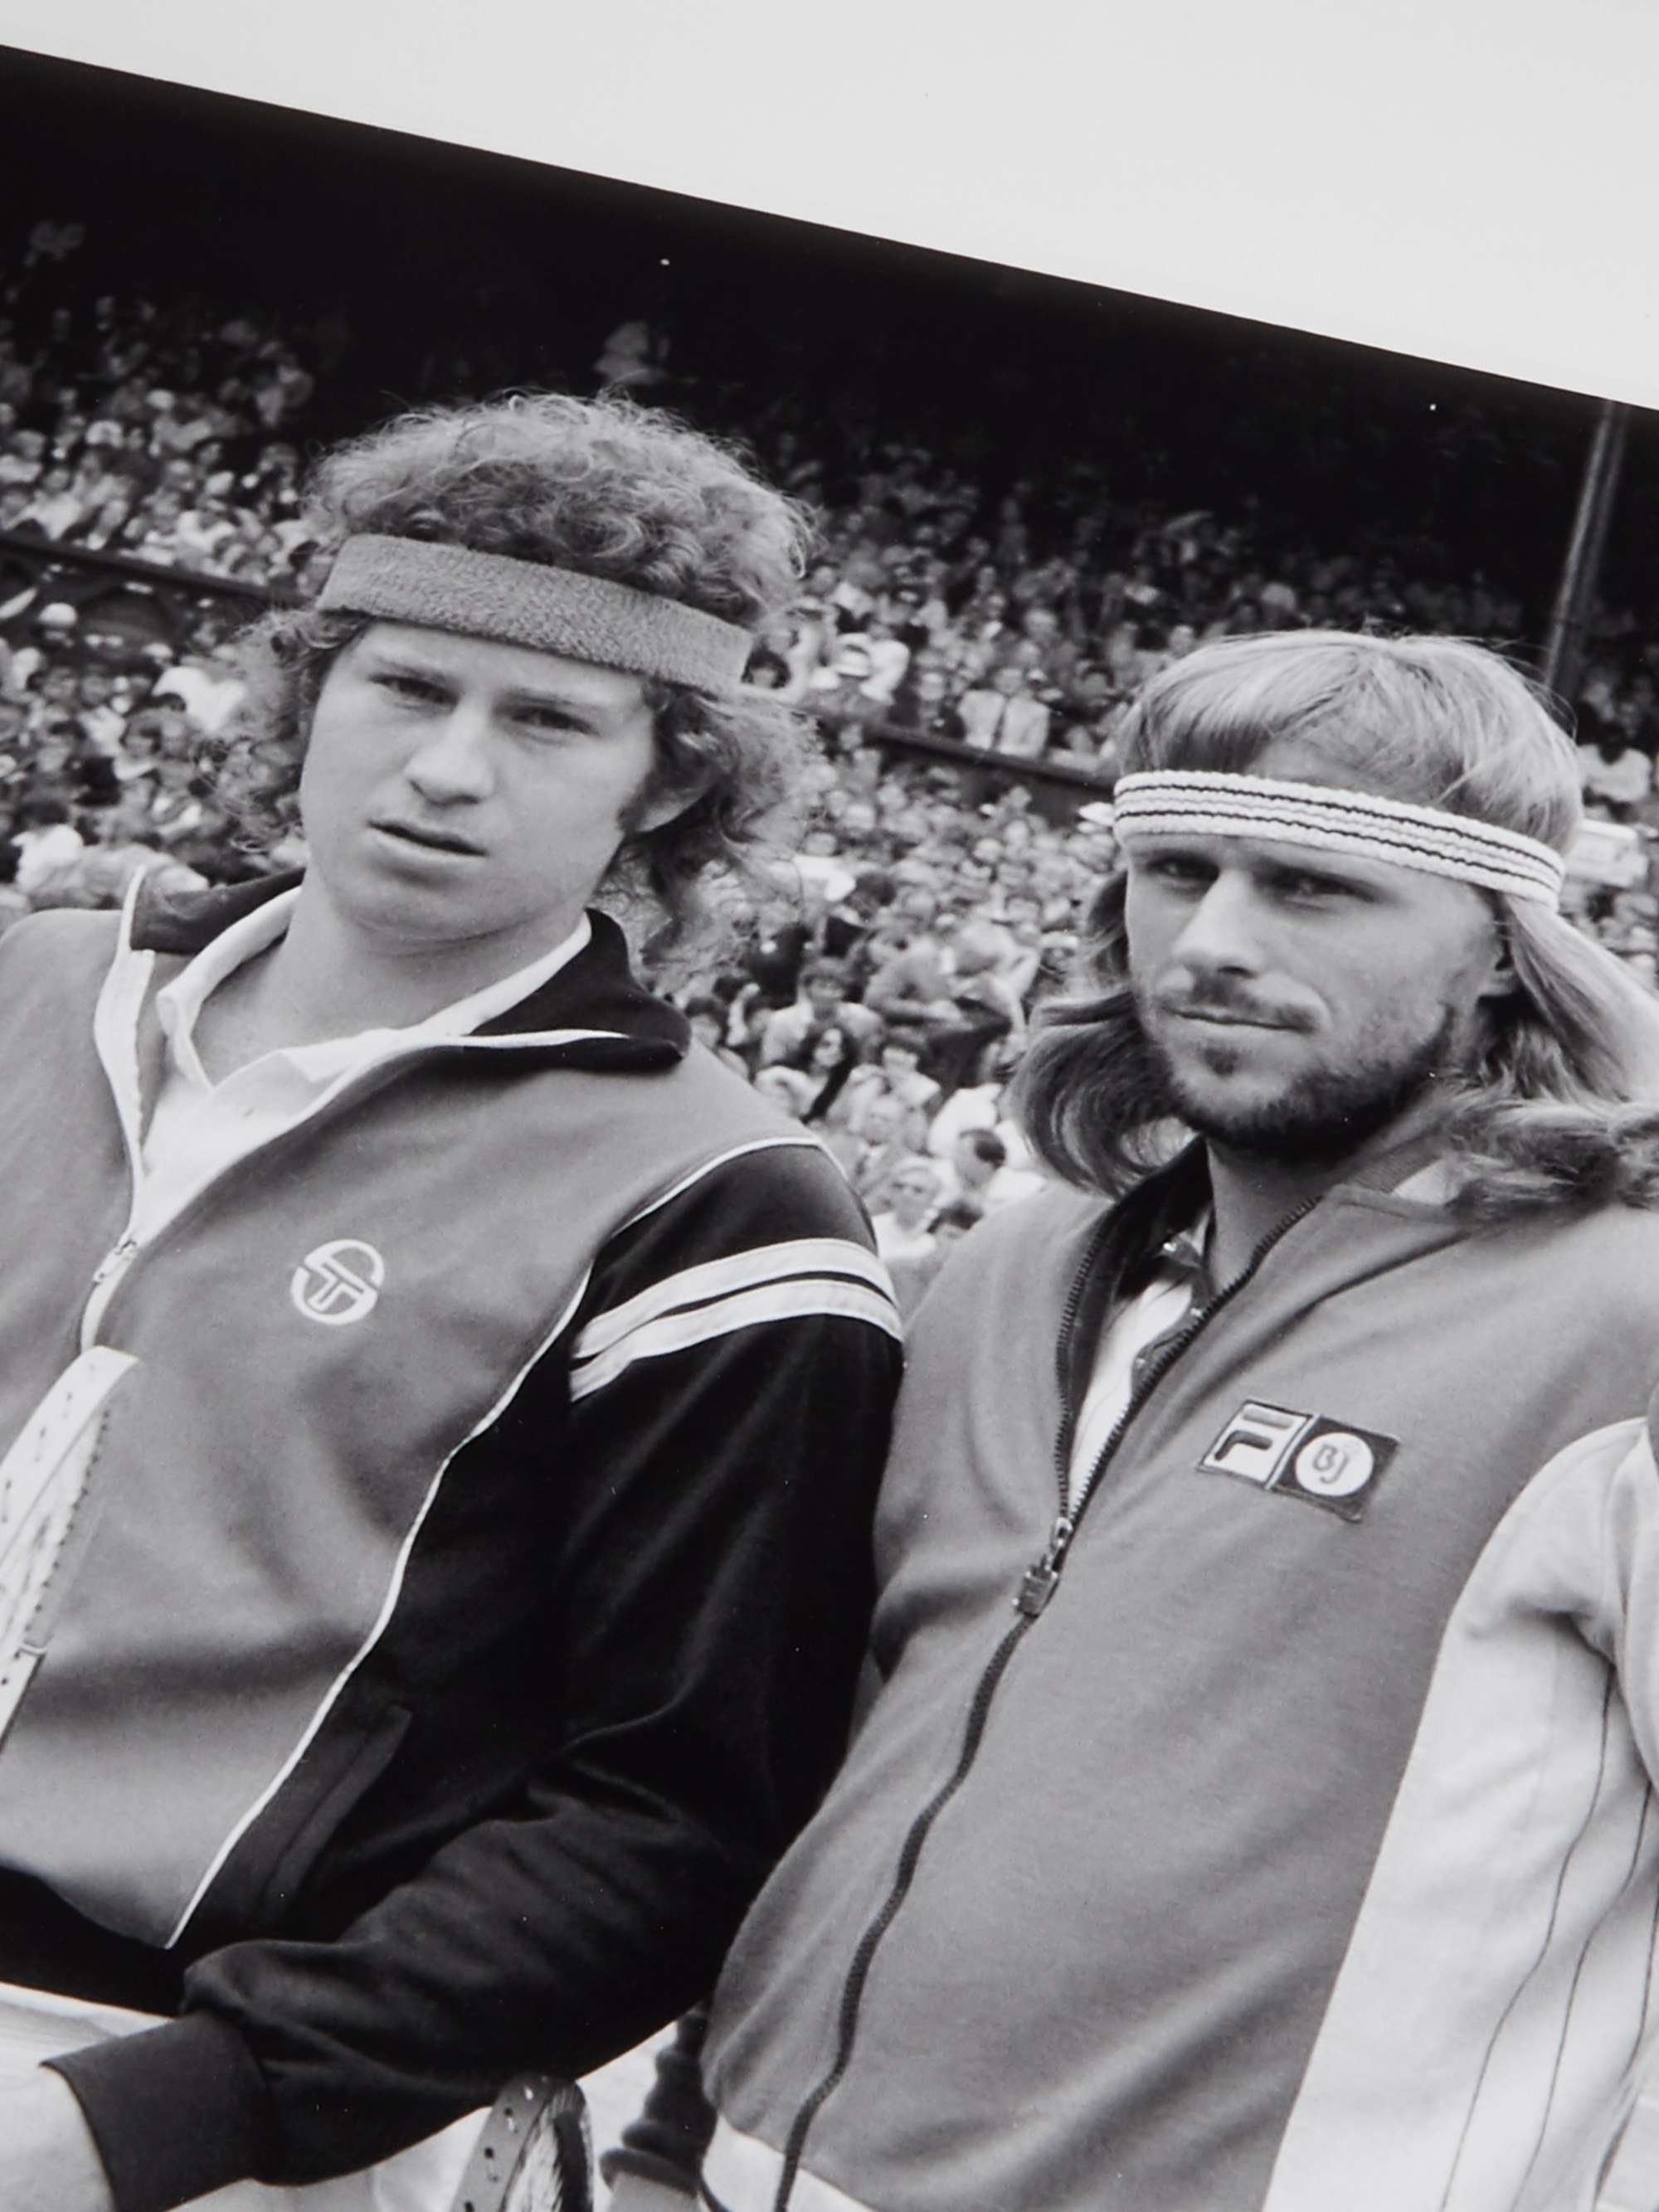 SONIC EDITIONS Framed 1980 Bjorn Borg and John McEnroe at Wimbledon Print, 16" x 20"